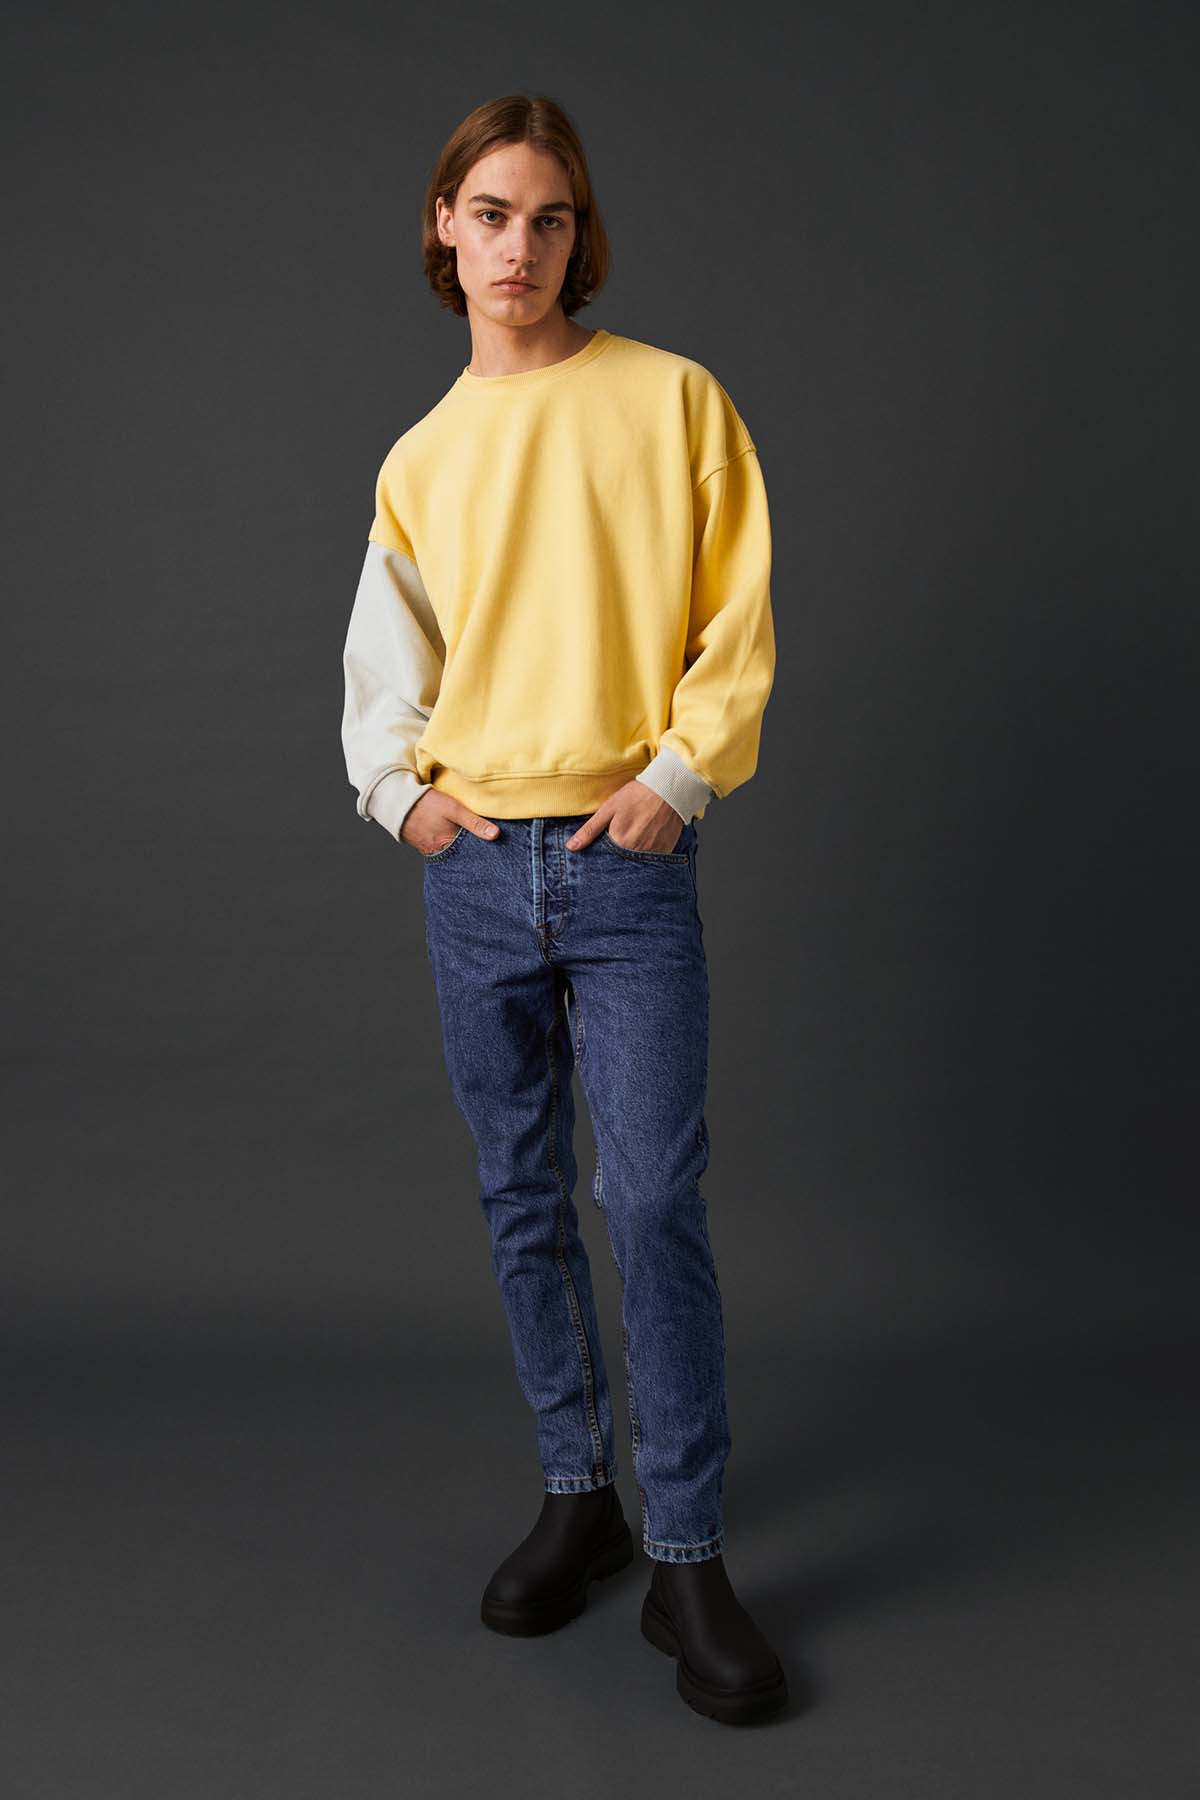 Matching Sweatshirt - Pale Yellow/Stone Gray